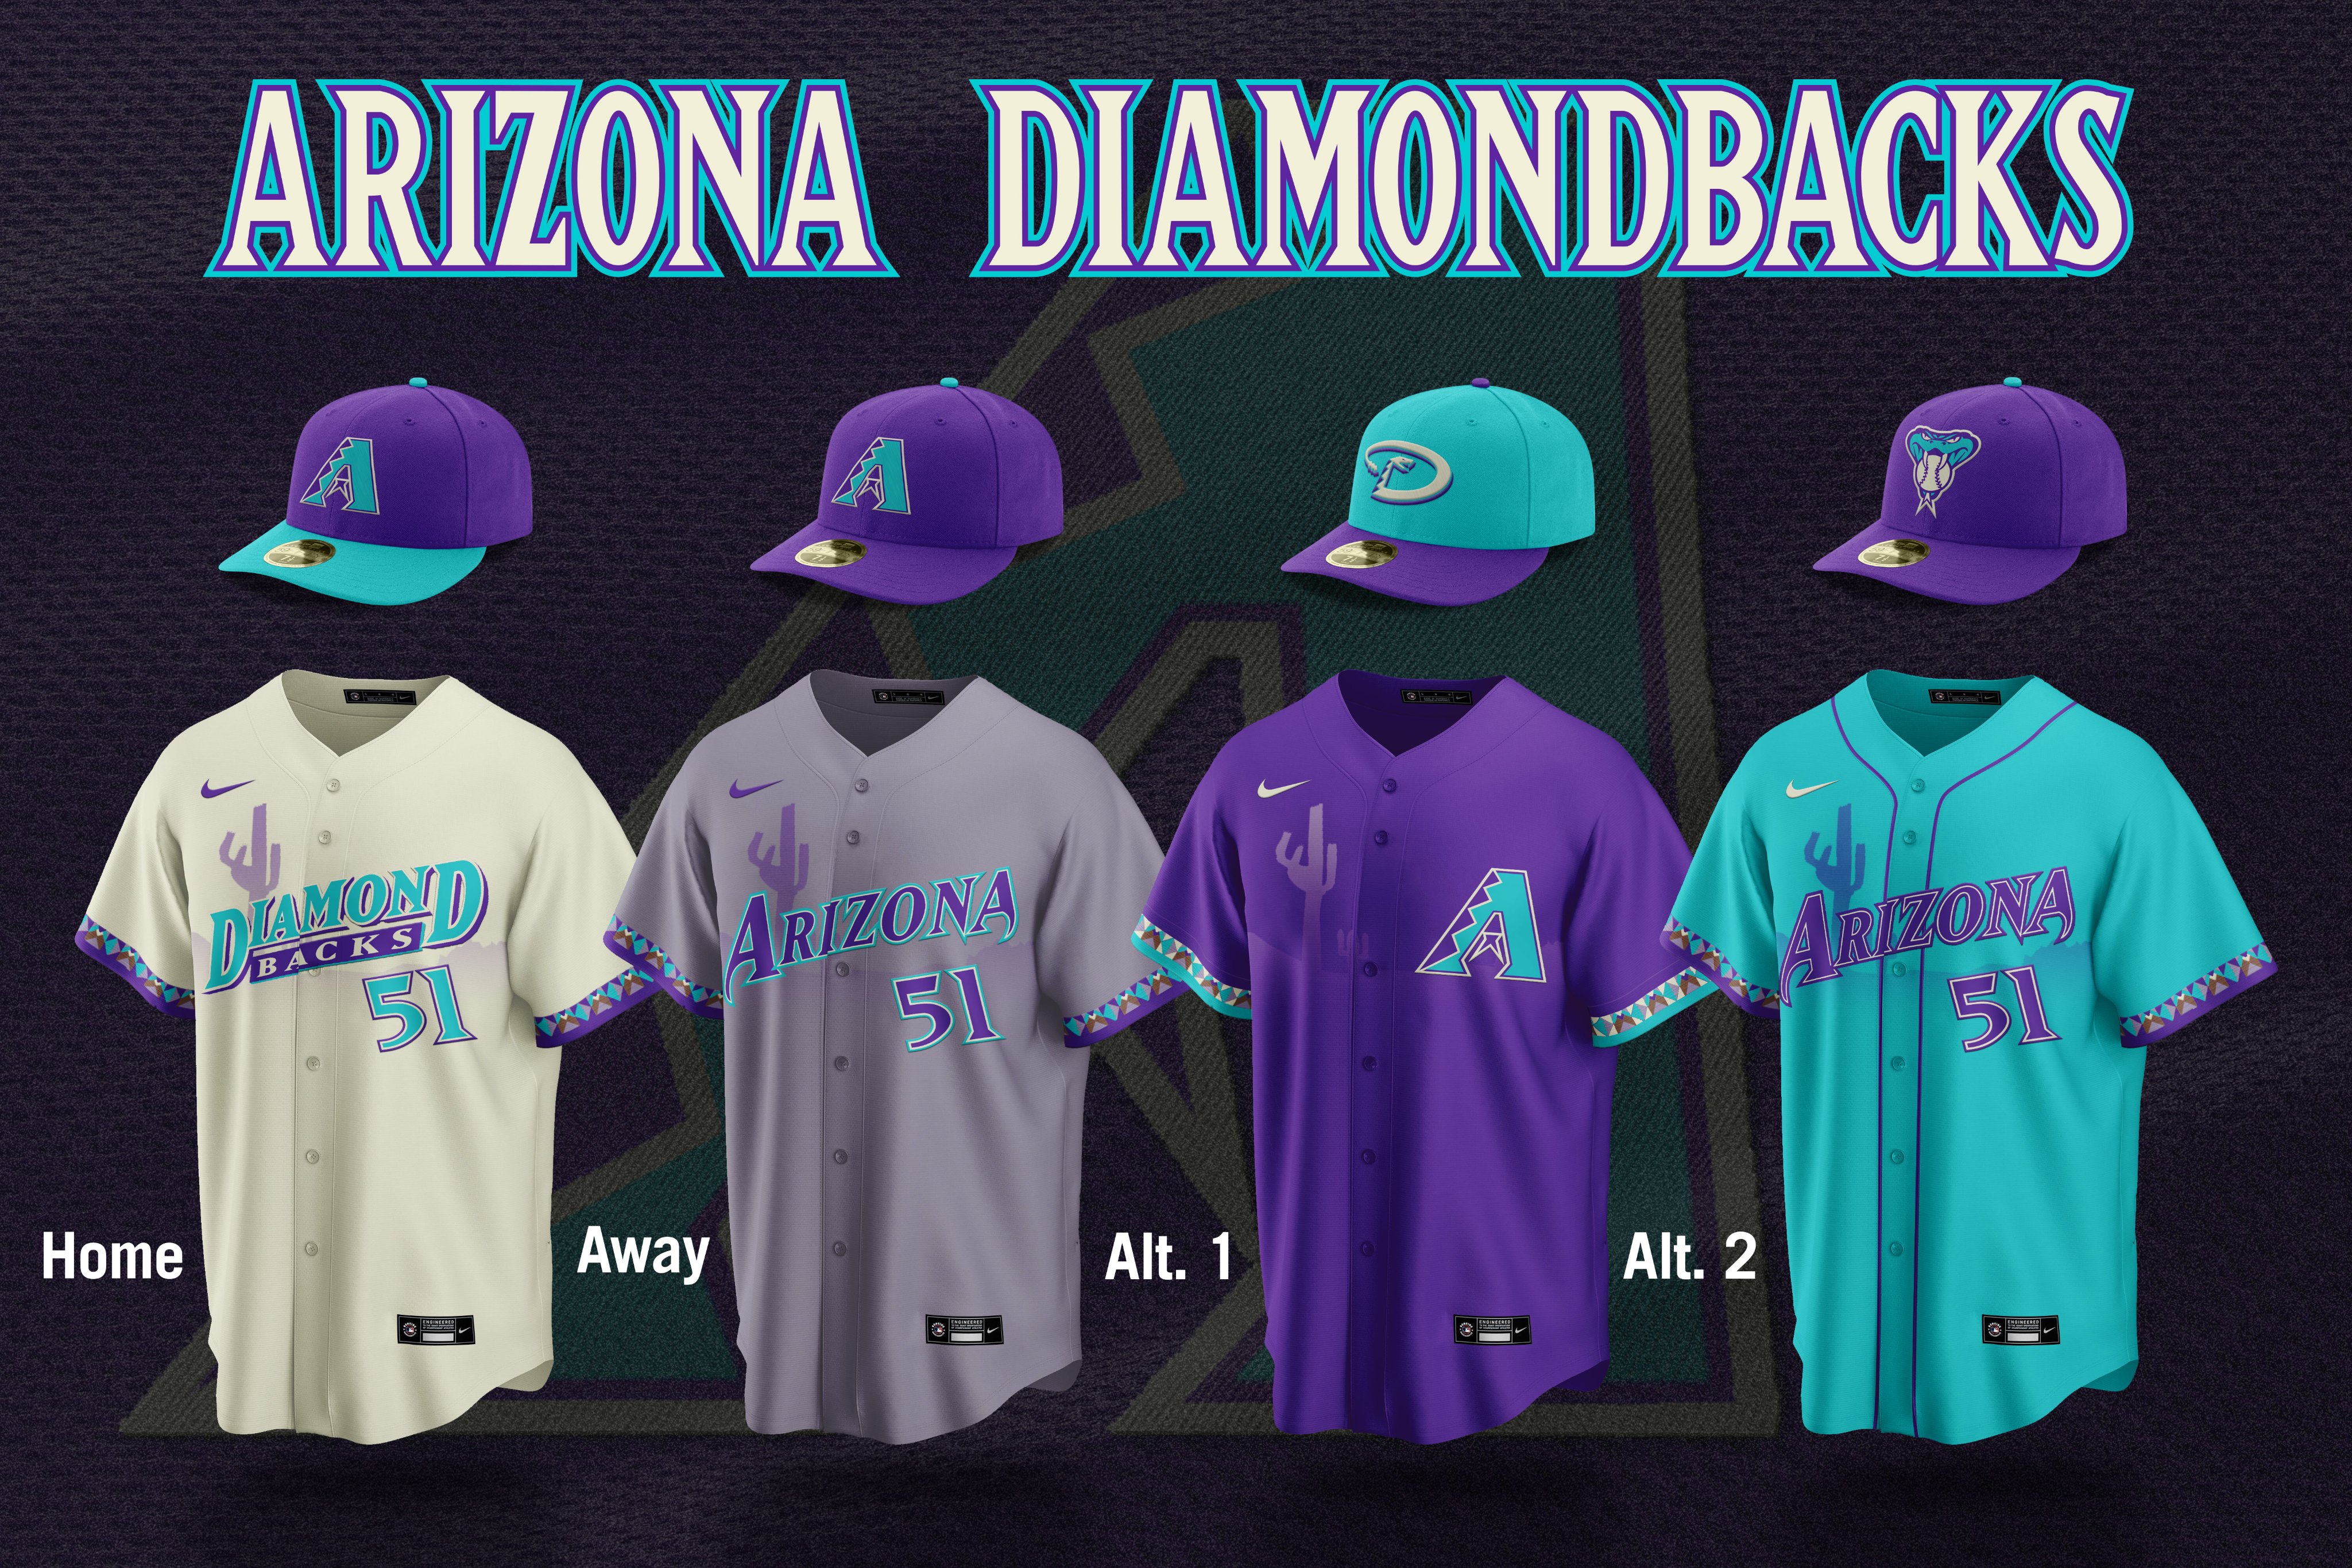 Arizona Diamondbacks purple and teal uniforms through the years